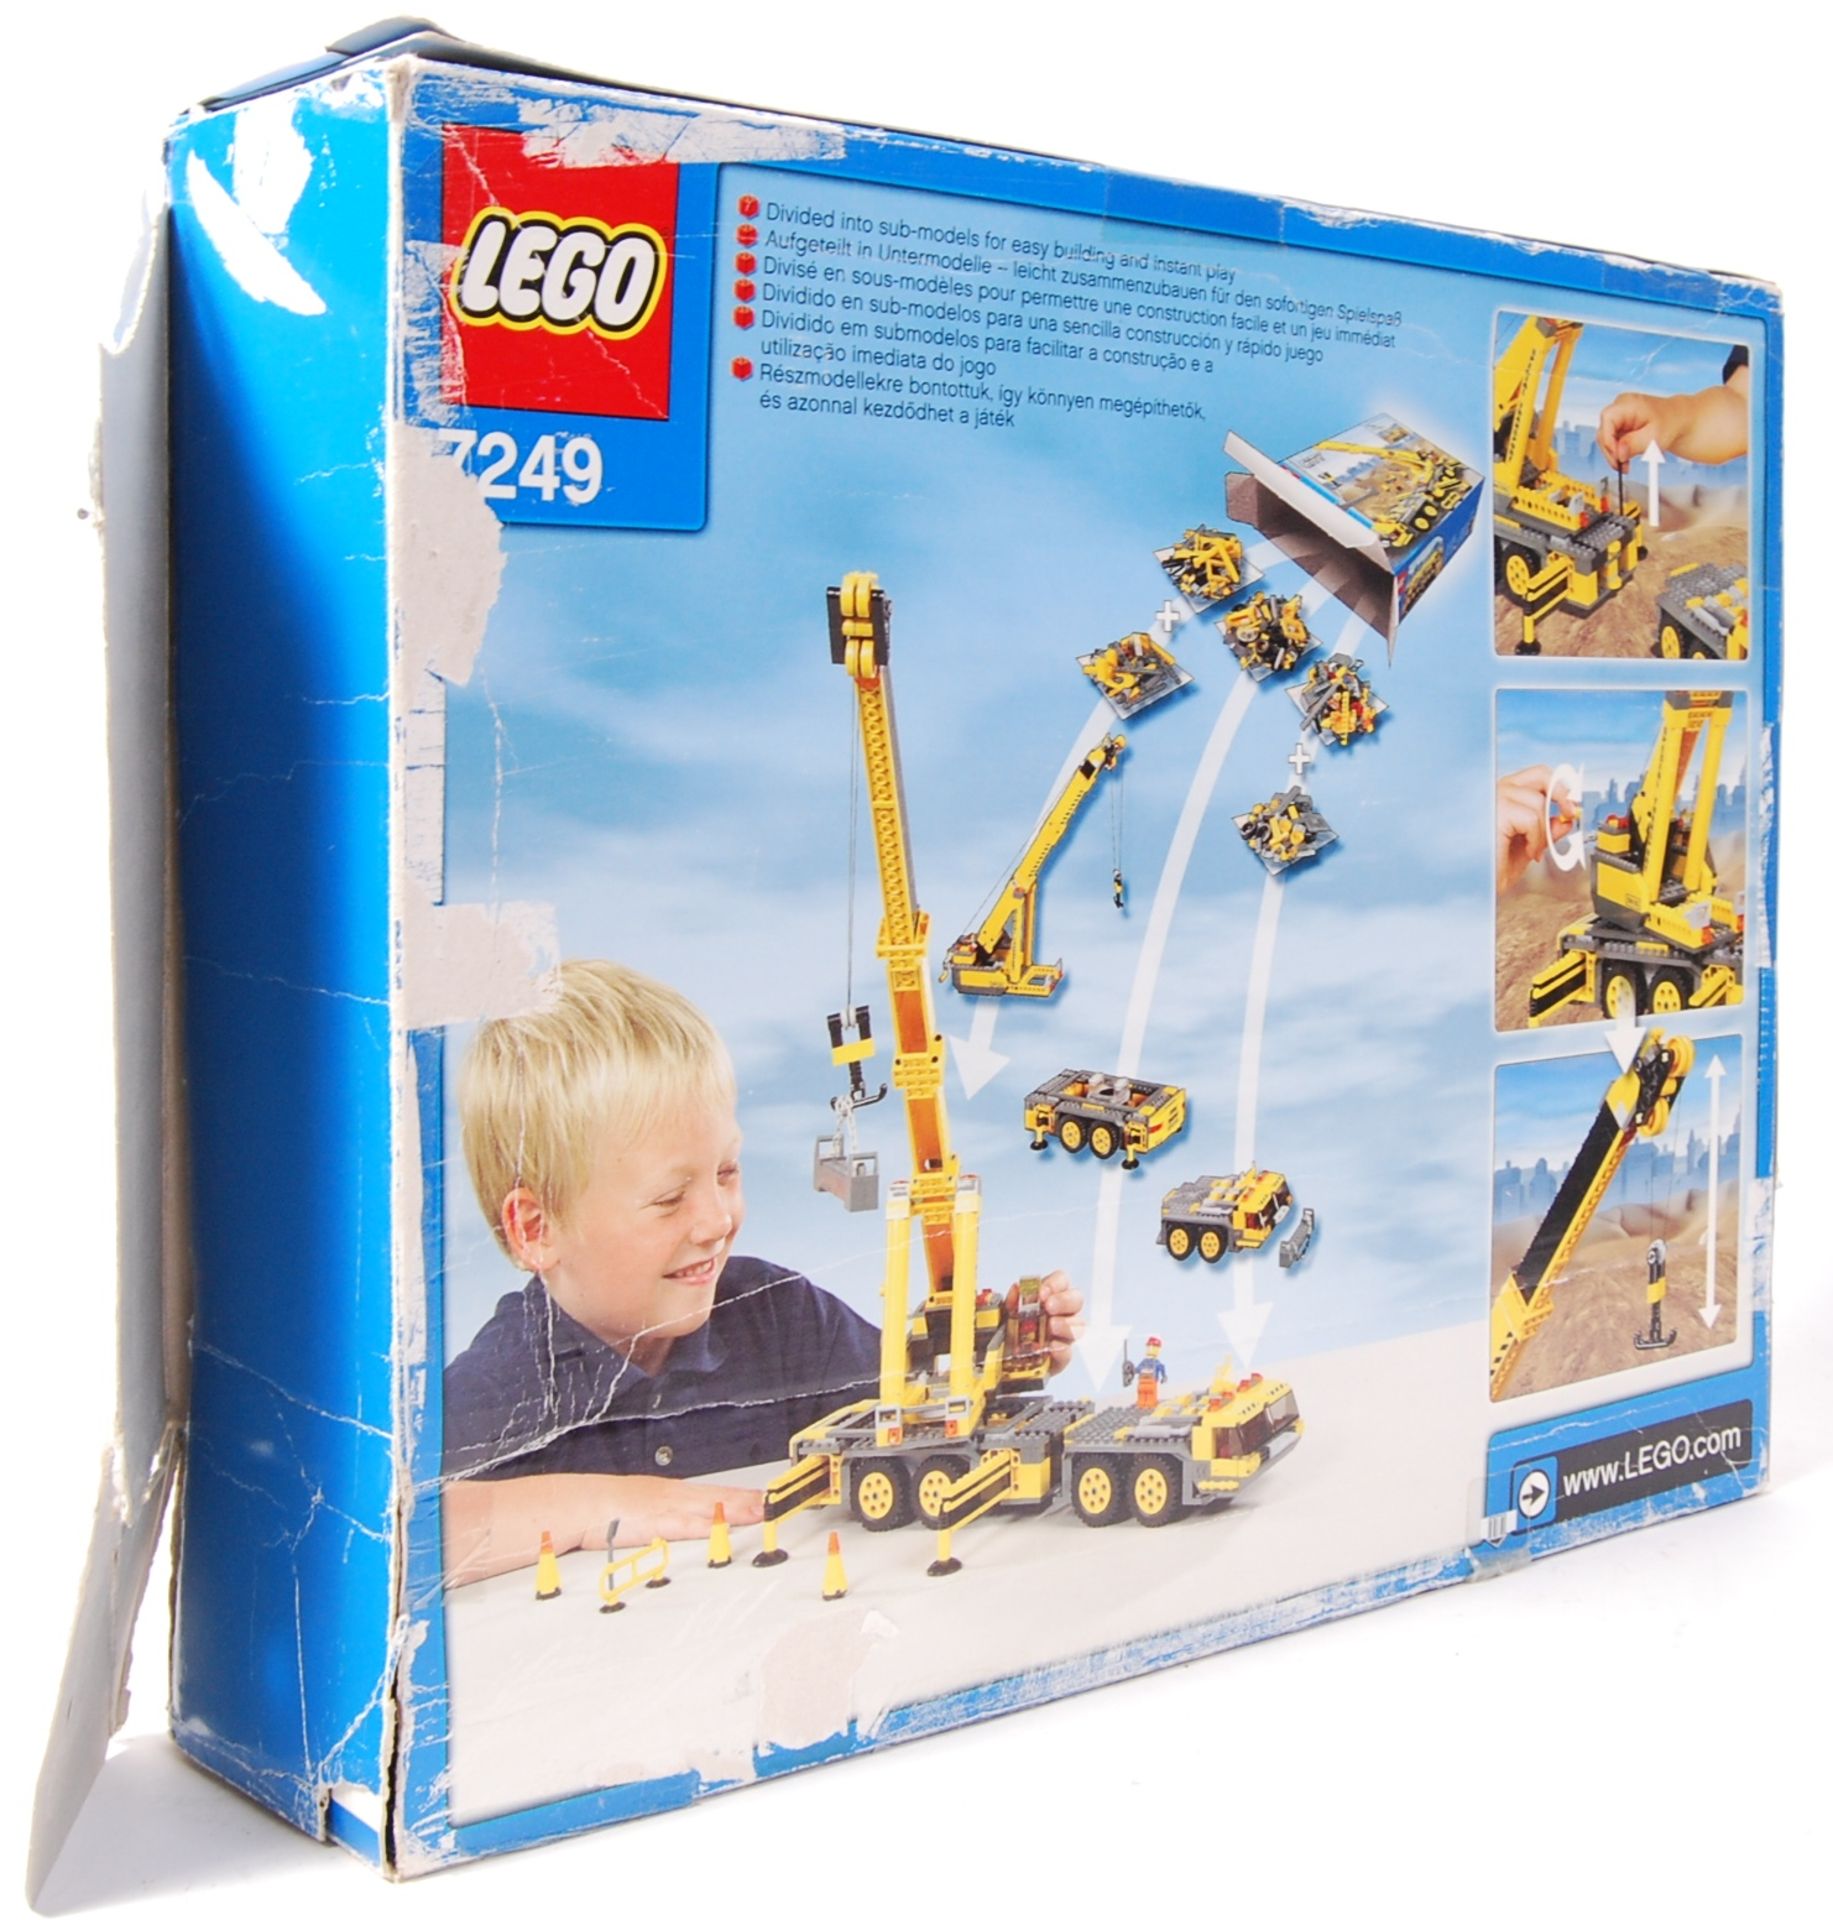 LEGO CITY 7249 ' MOBILE CRANE ' BOXED SET - Bild 2 aus 2